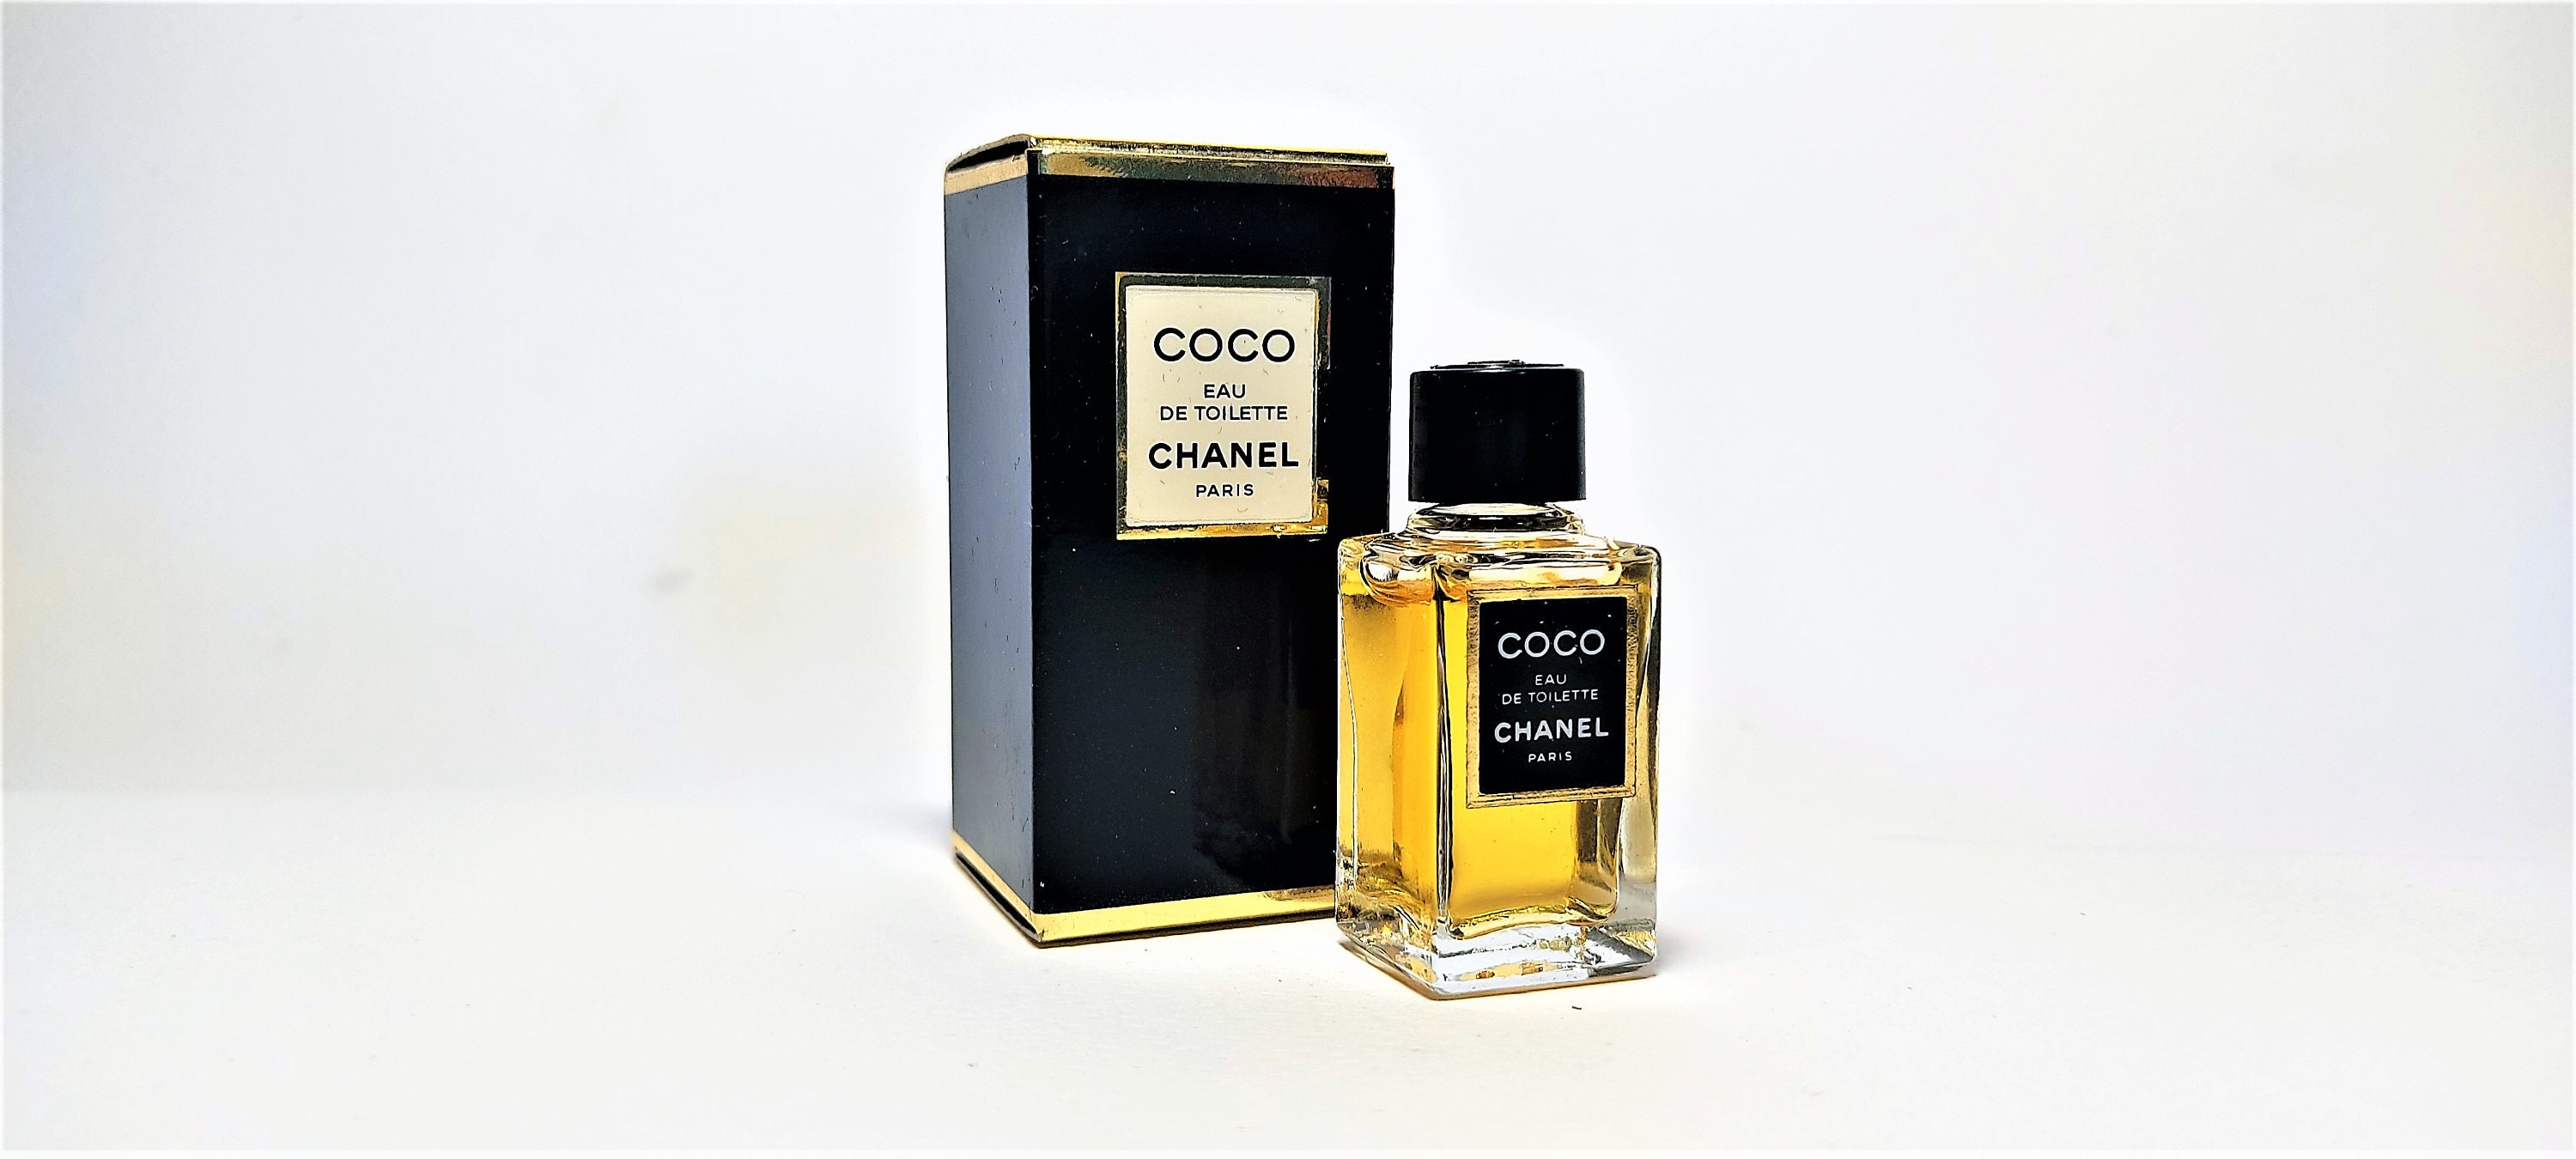 CHANEL Coco Mademoiselle 6ml EDP Perfume SAMPLE